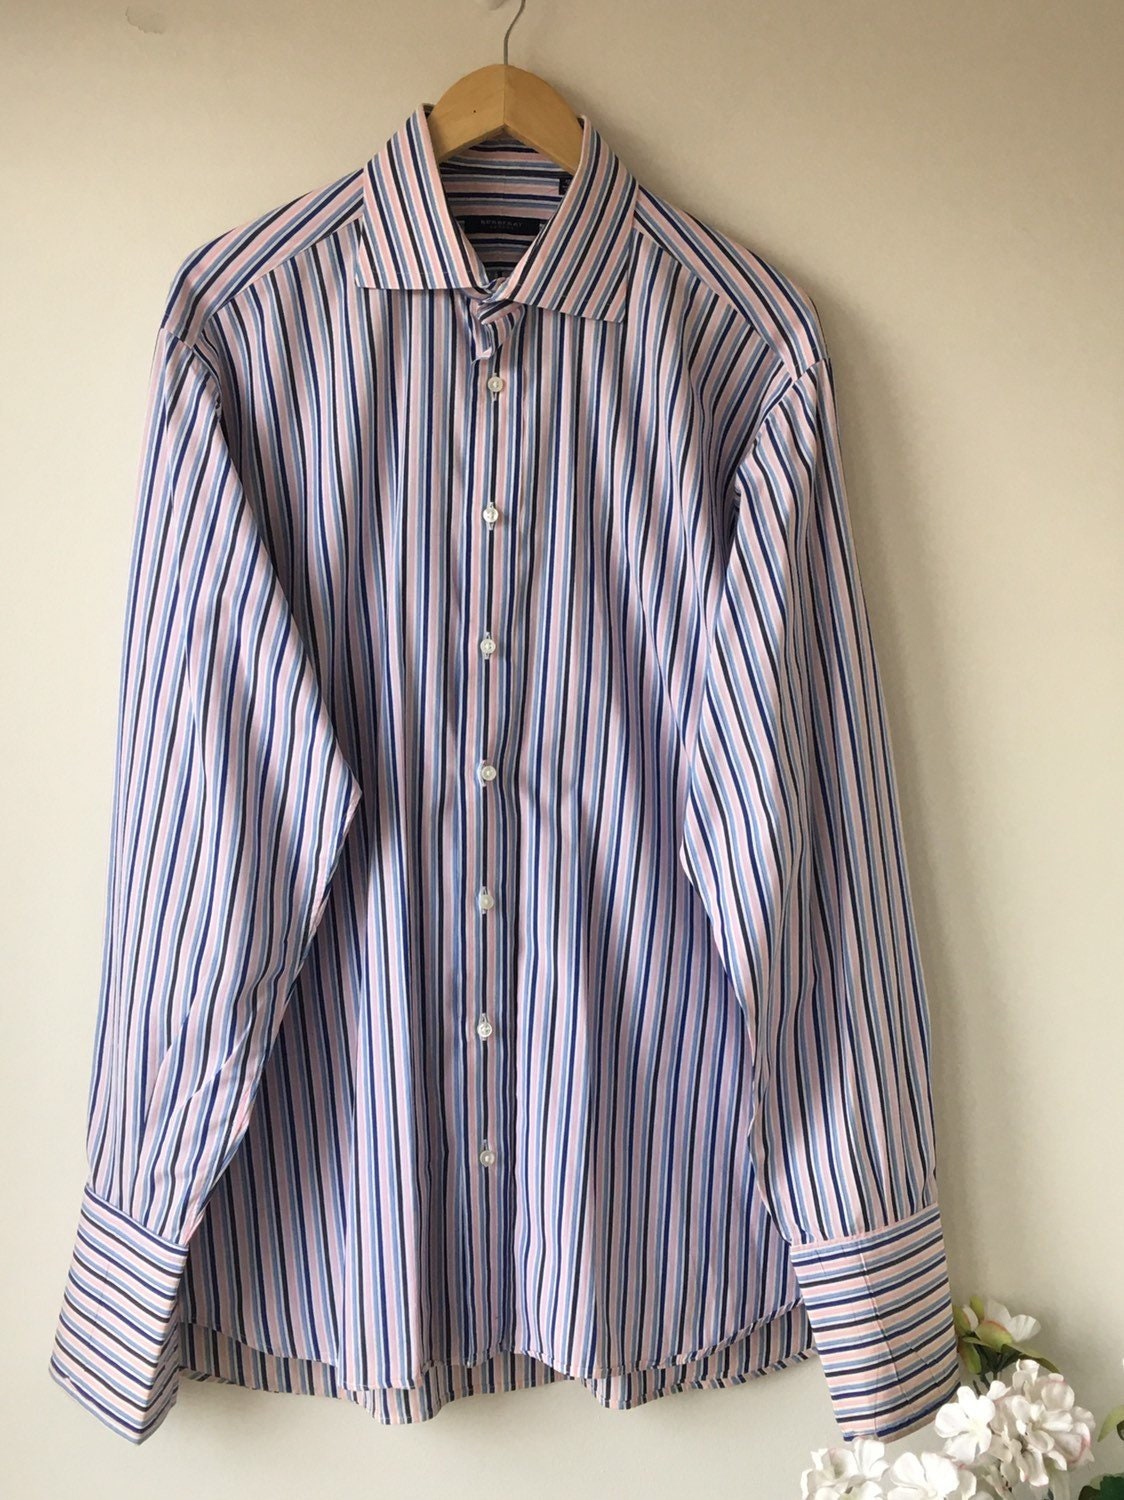 Burberry Shirt Vintage Stripe Dress Shirt Blue Pink White - Etsy UK